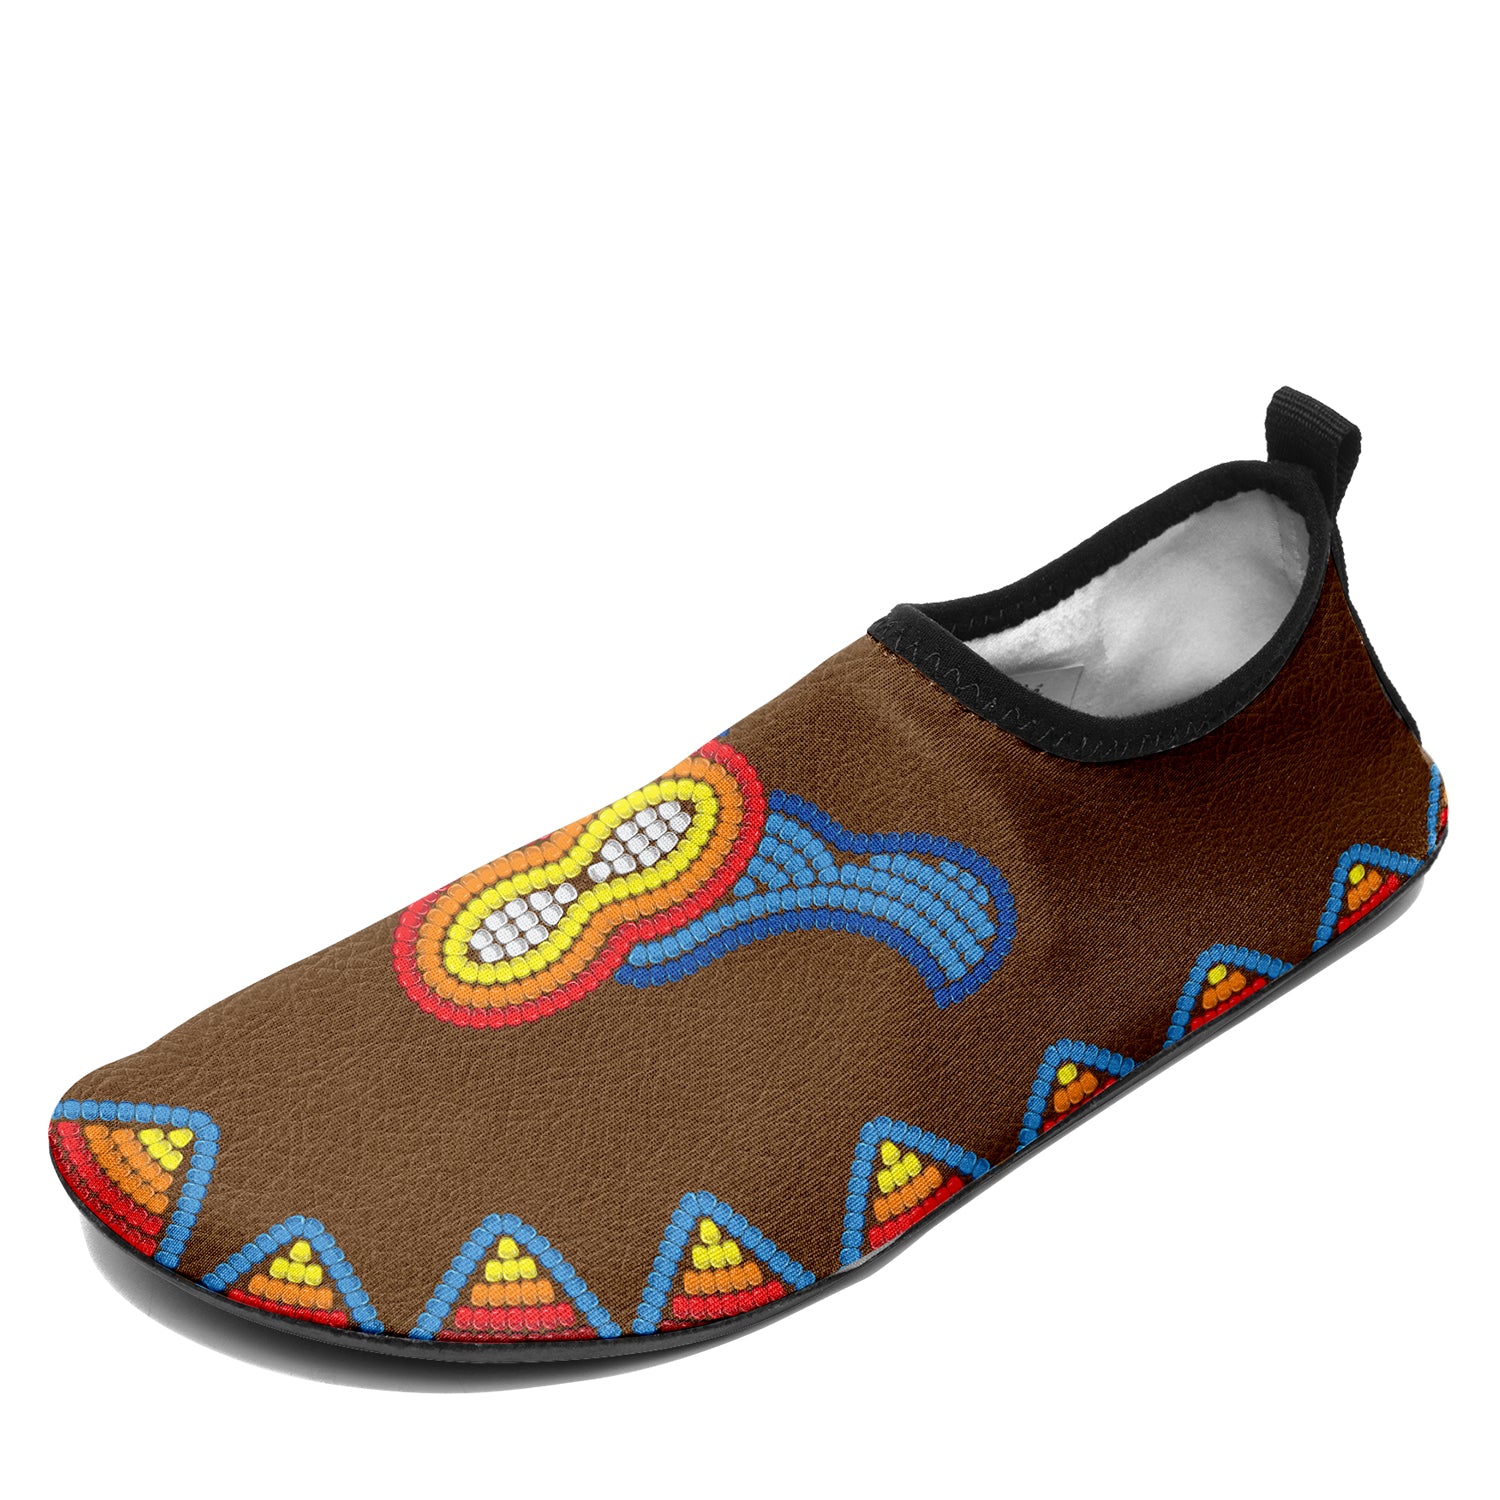 Nomad's Nectar 2 Kid's Sockamoccs Slip On Shoes